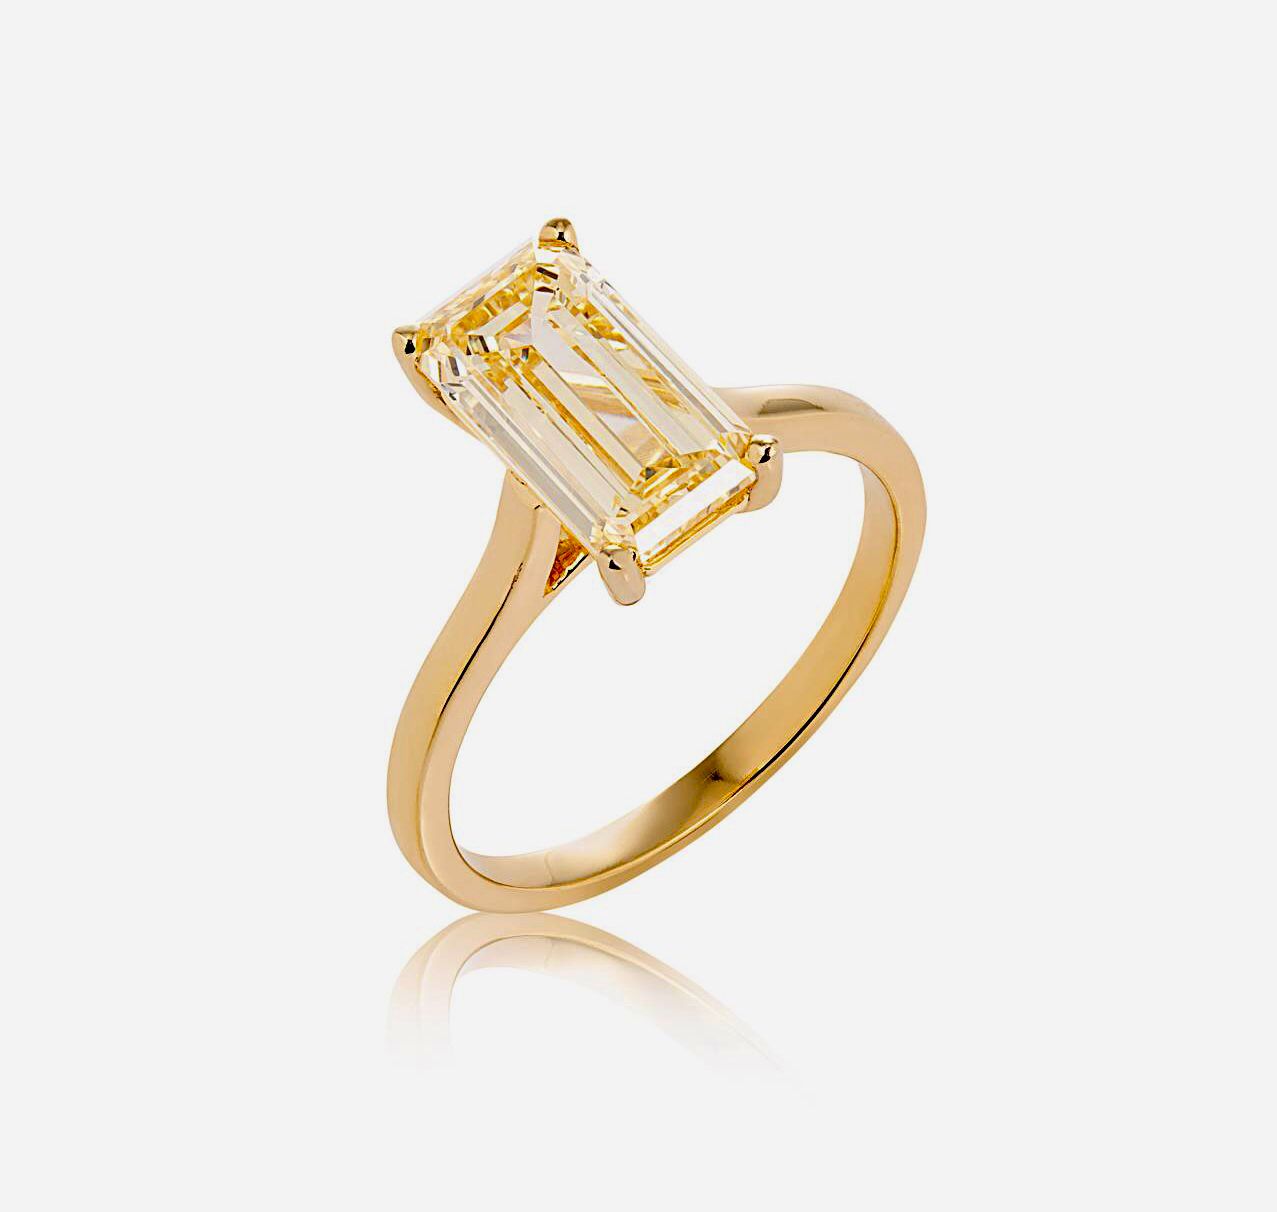 Fancy Intense Yellow Emerald Cut 2.50Ct Diamond Ring VS1 Clarity 18kt Yellow Gold - GCI Certified